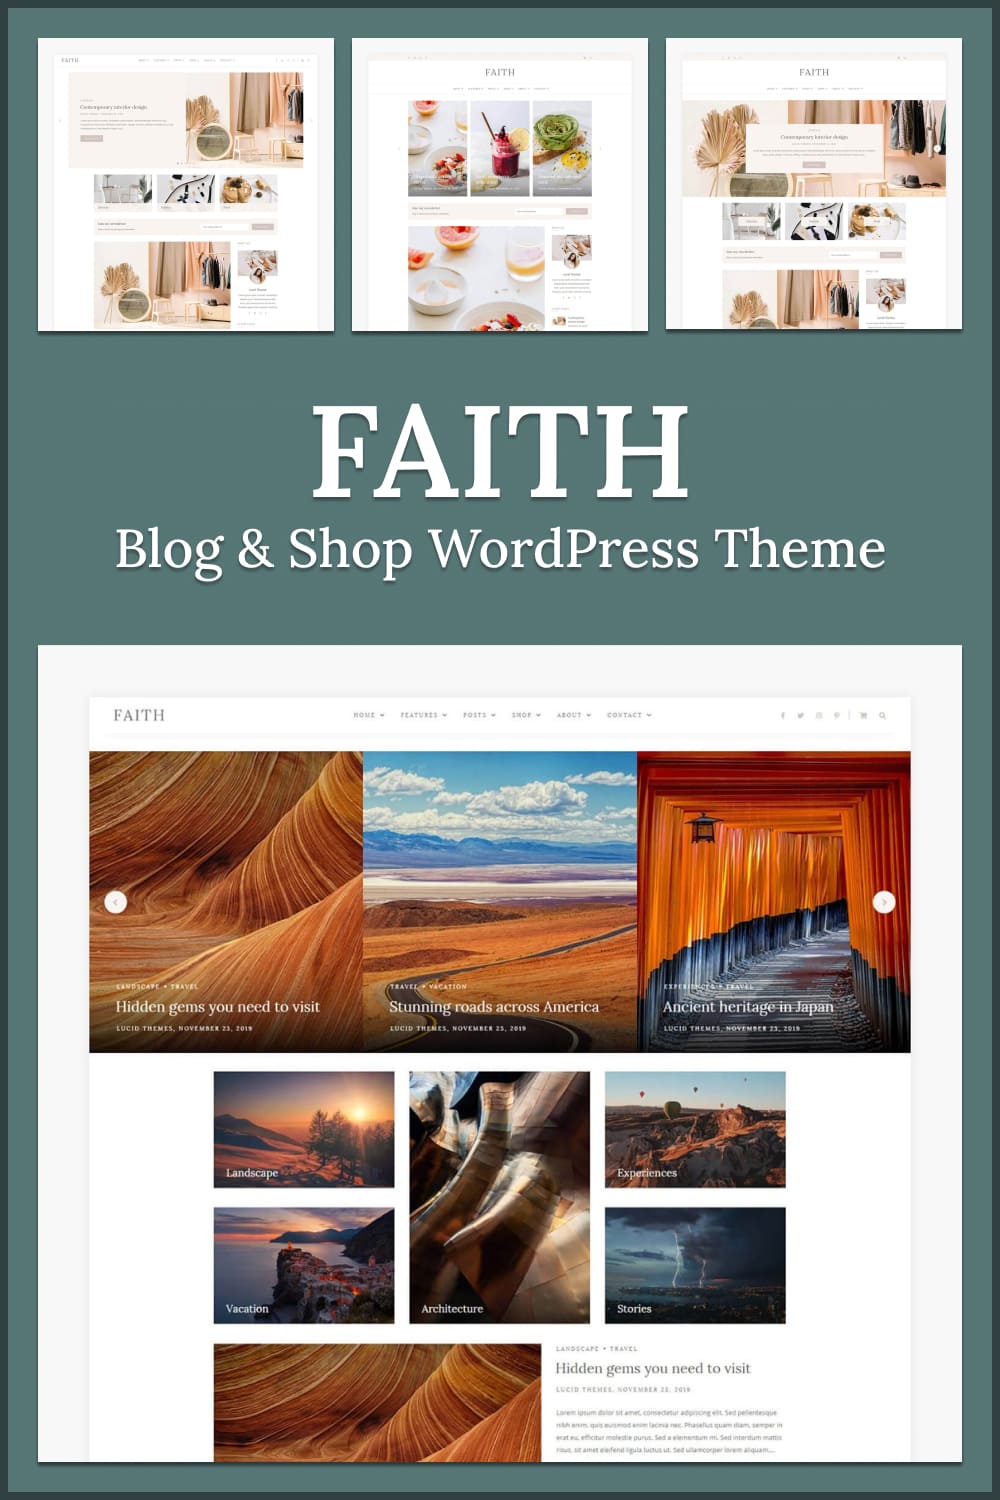 faith blog shop wordpress theme 02 922